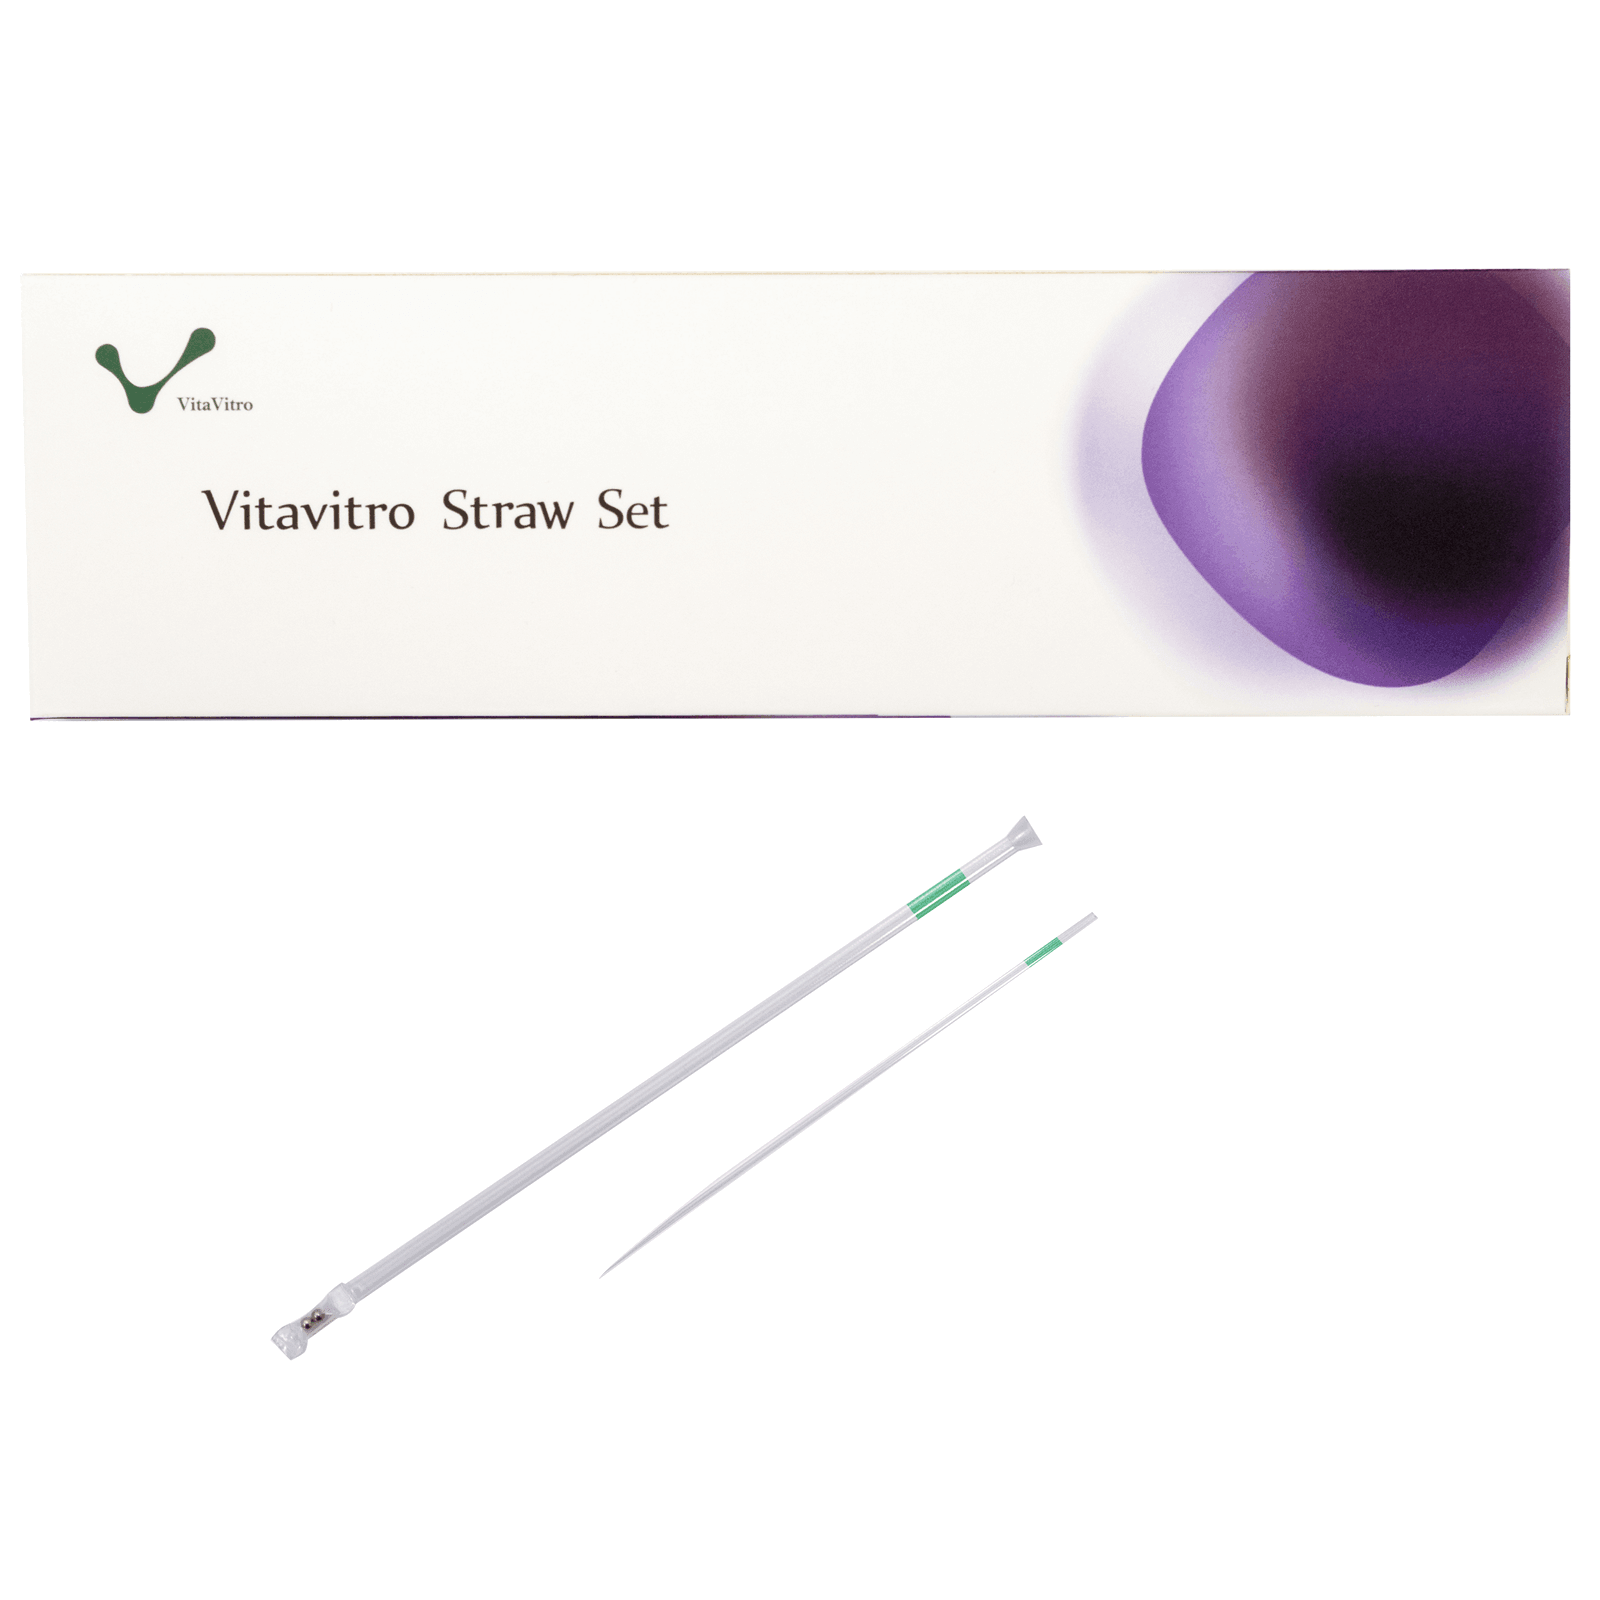 FluidGard 160 Anti-Fog Procedure Mask – IVF Store